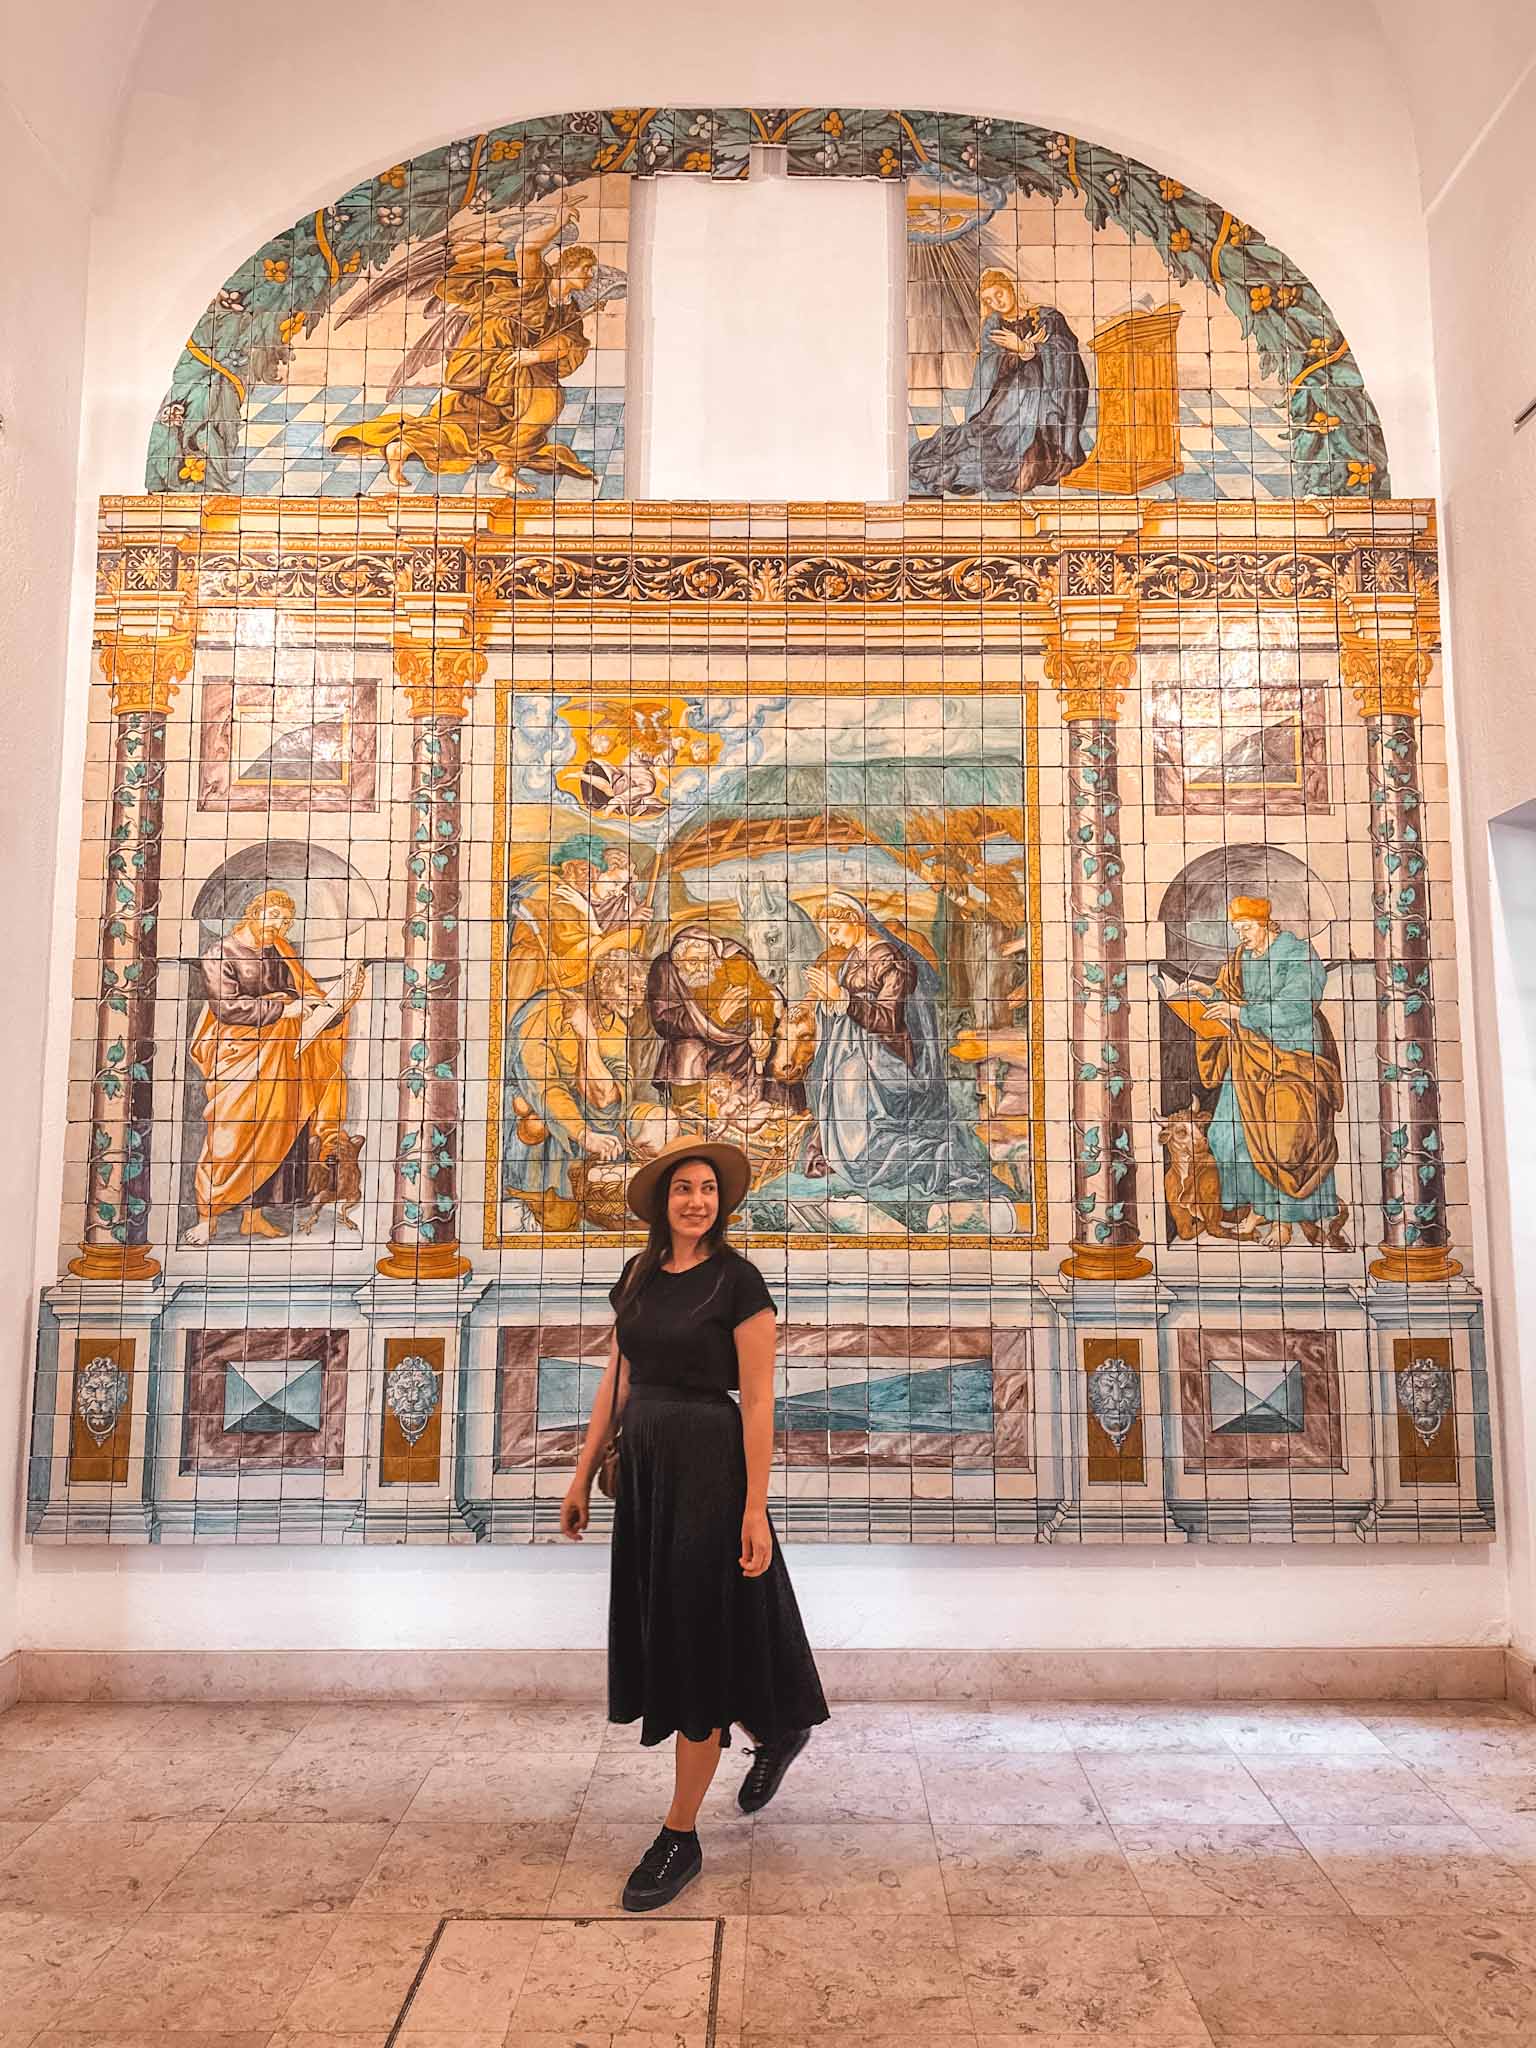 Best Instagram photo spots in Lisbon, Portugal - National Tile Museum